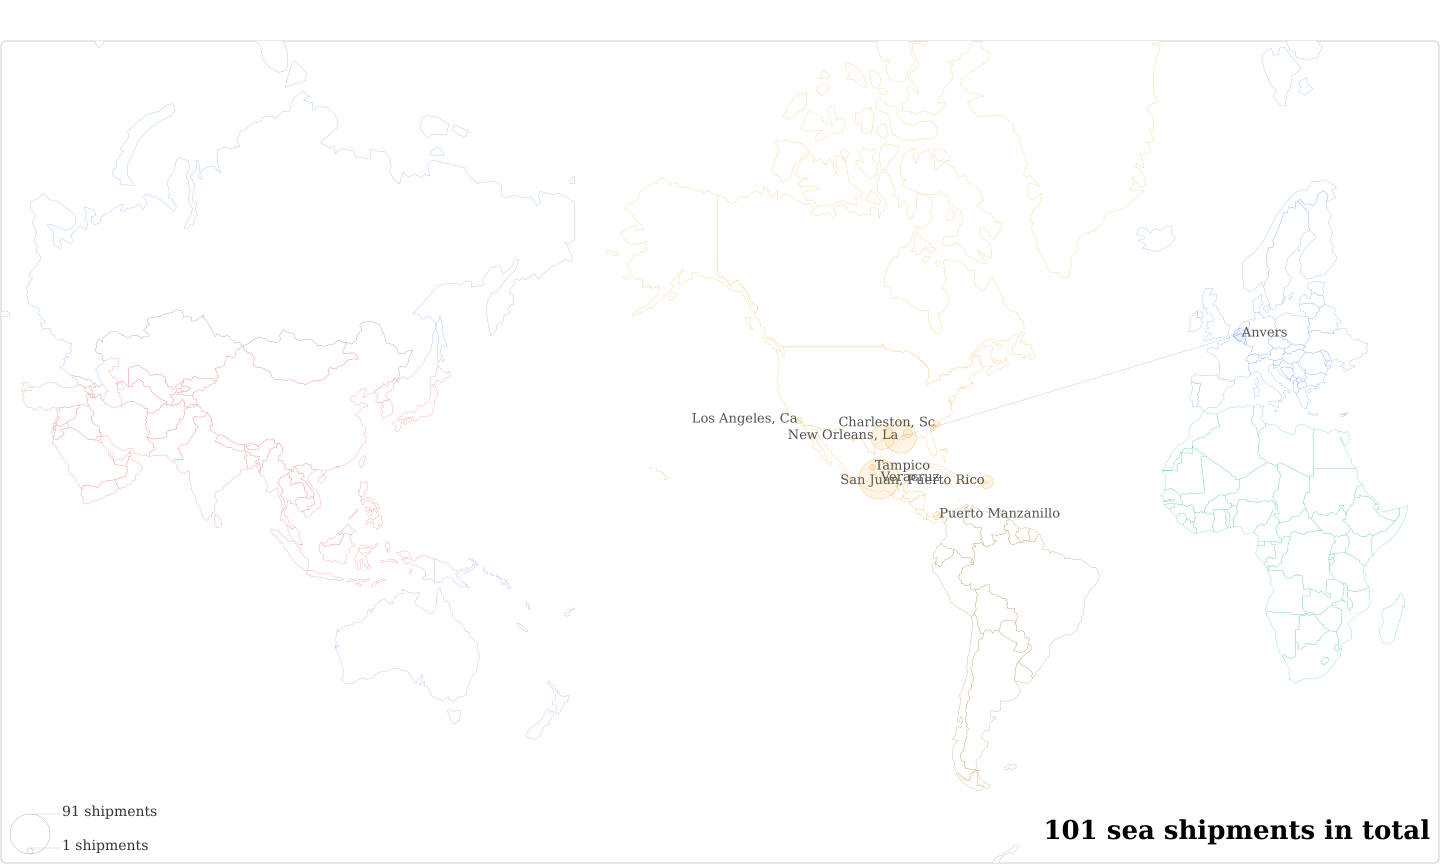 Derivados Industrializados Del Cafe's Imports Per Country Map